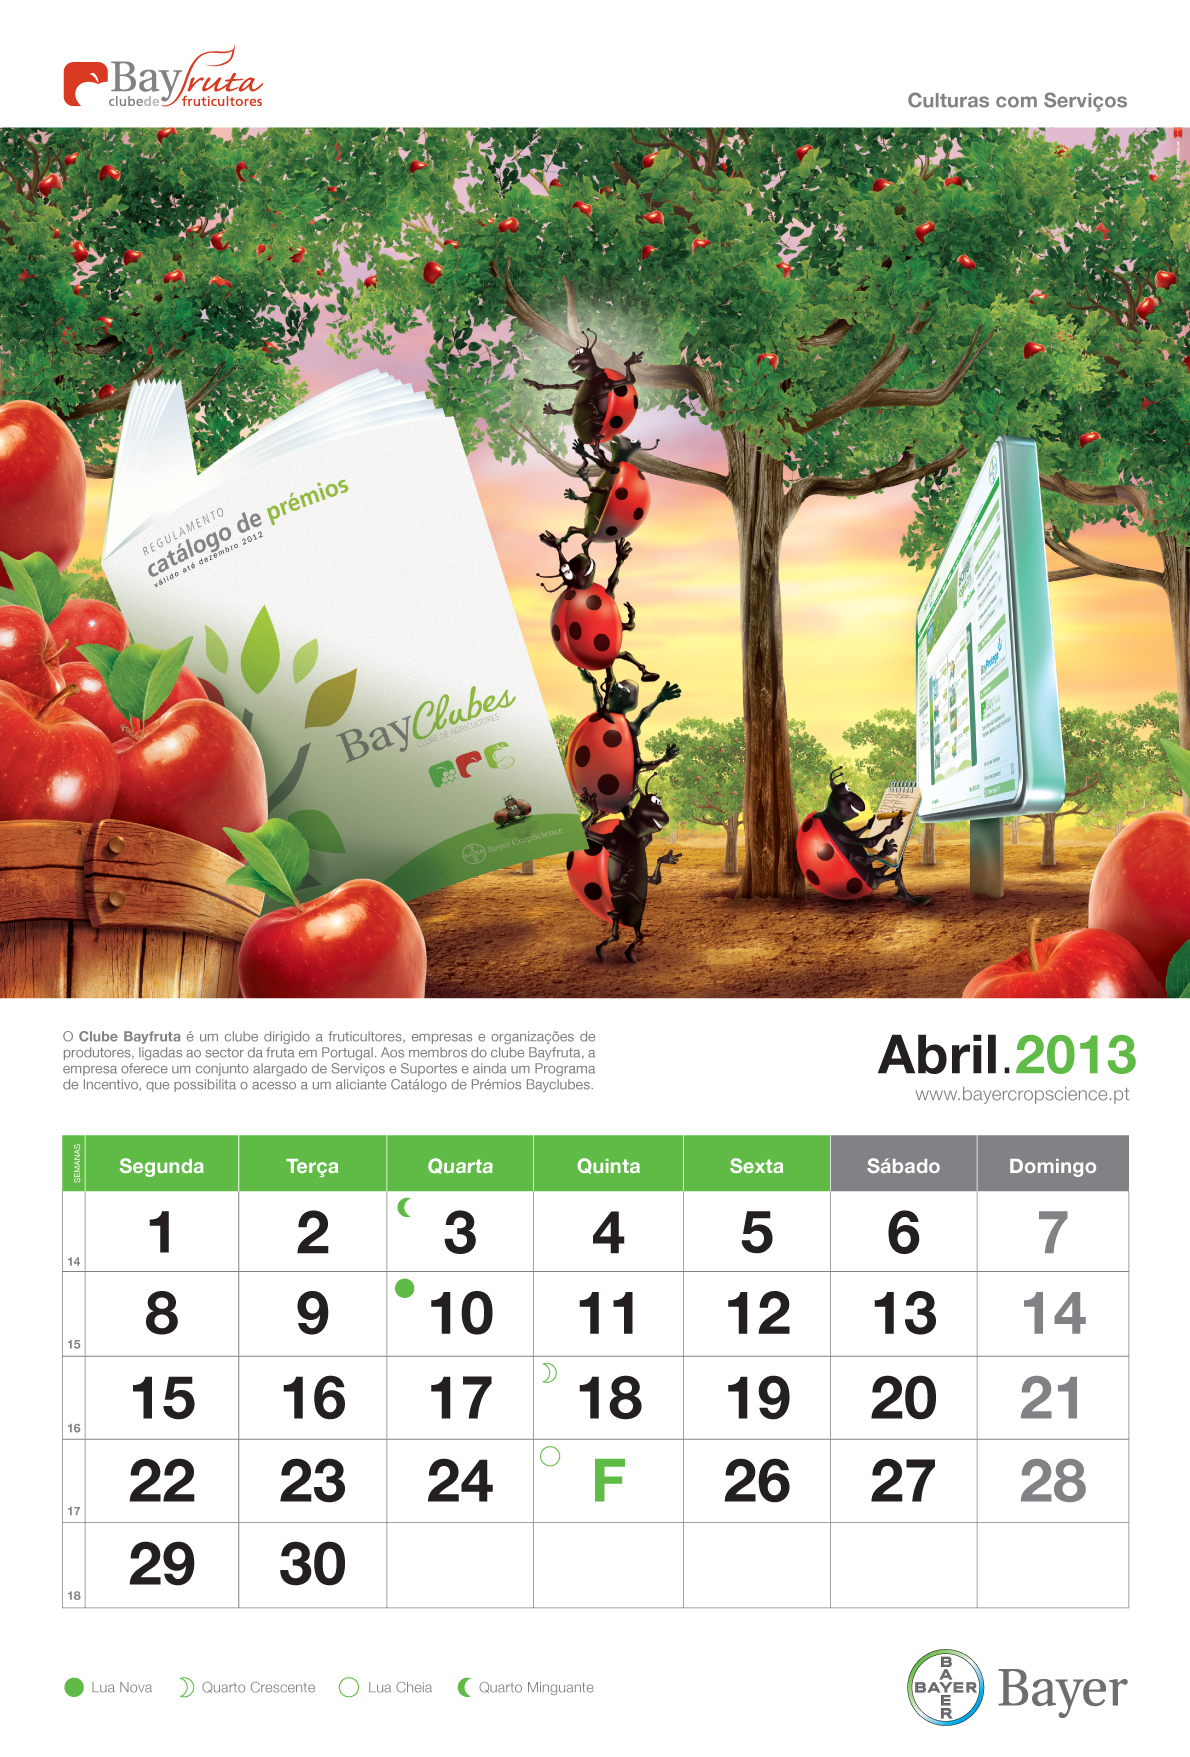 Calendar 2013 Bayer print calendar agriculture beetle draw months days year